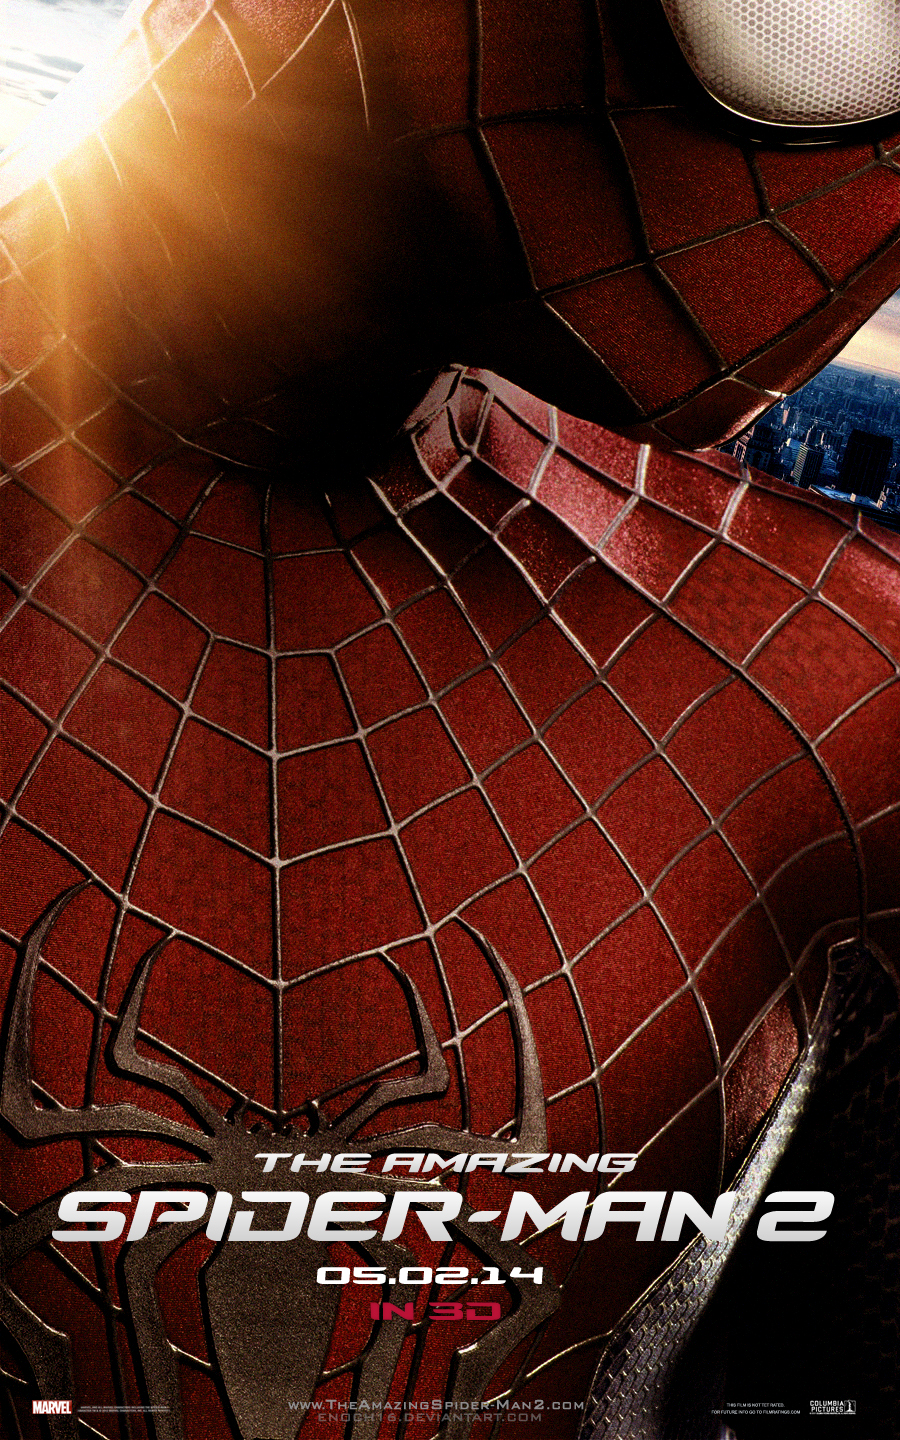 The Amazing Spider-Man 2 2014 - Full Cast Crew - IMDb